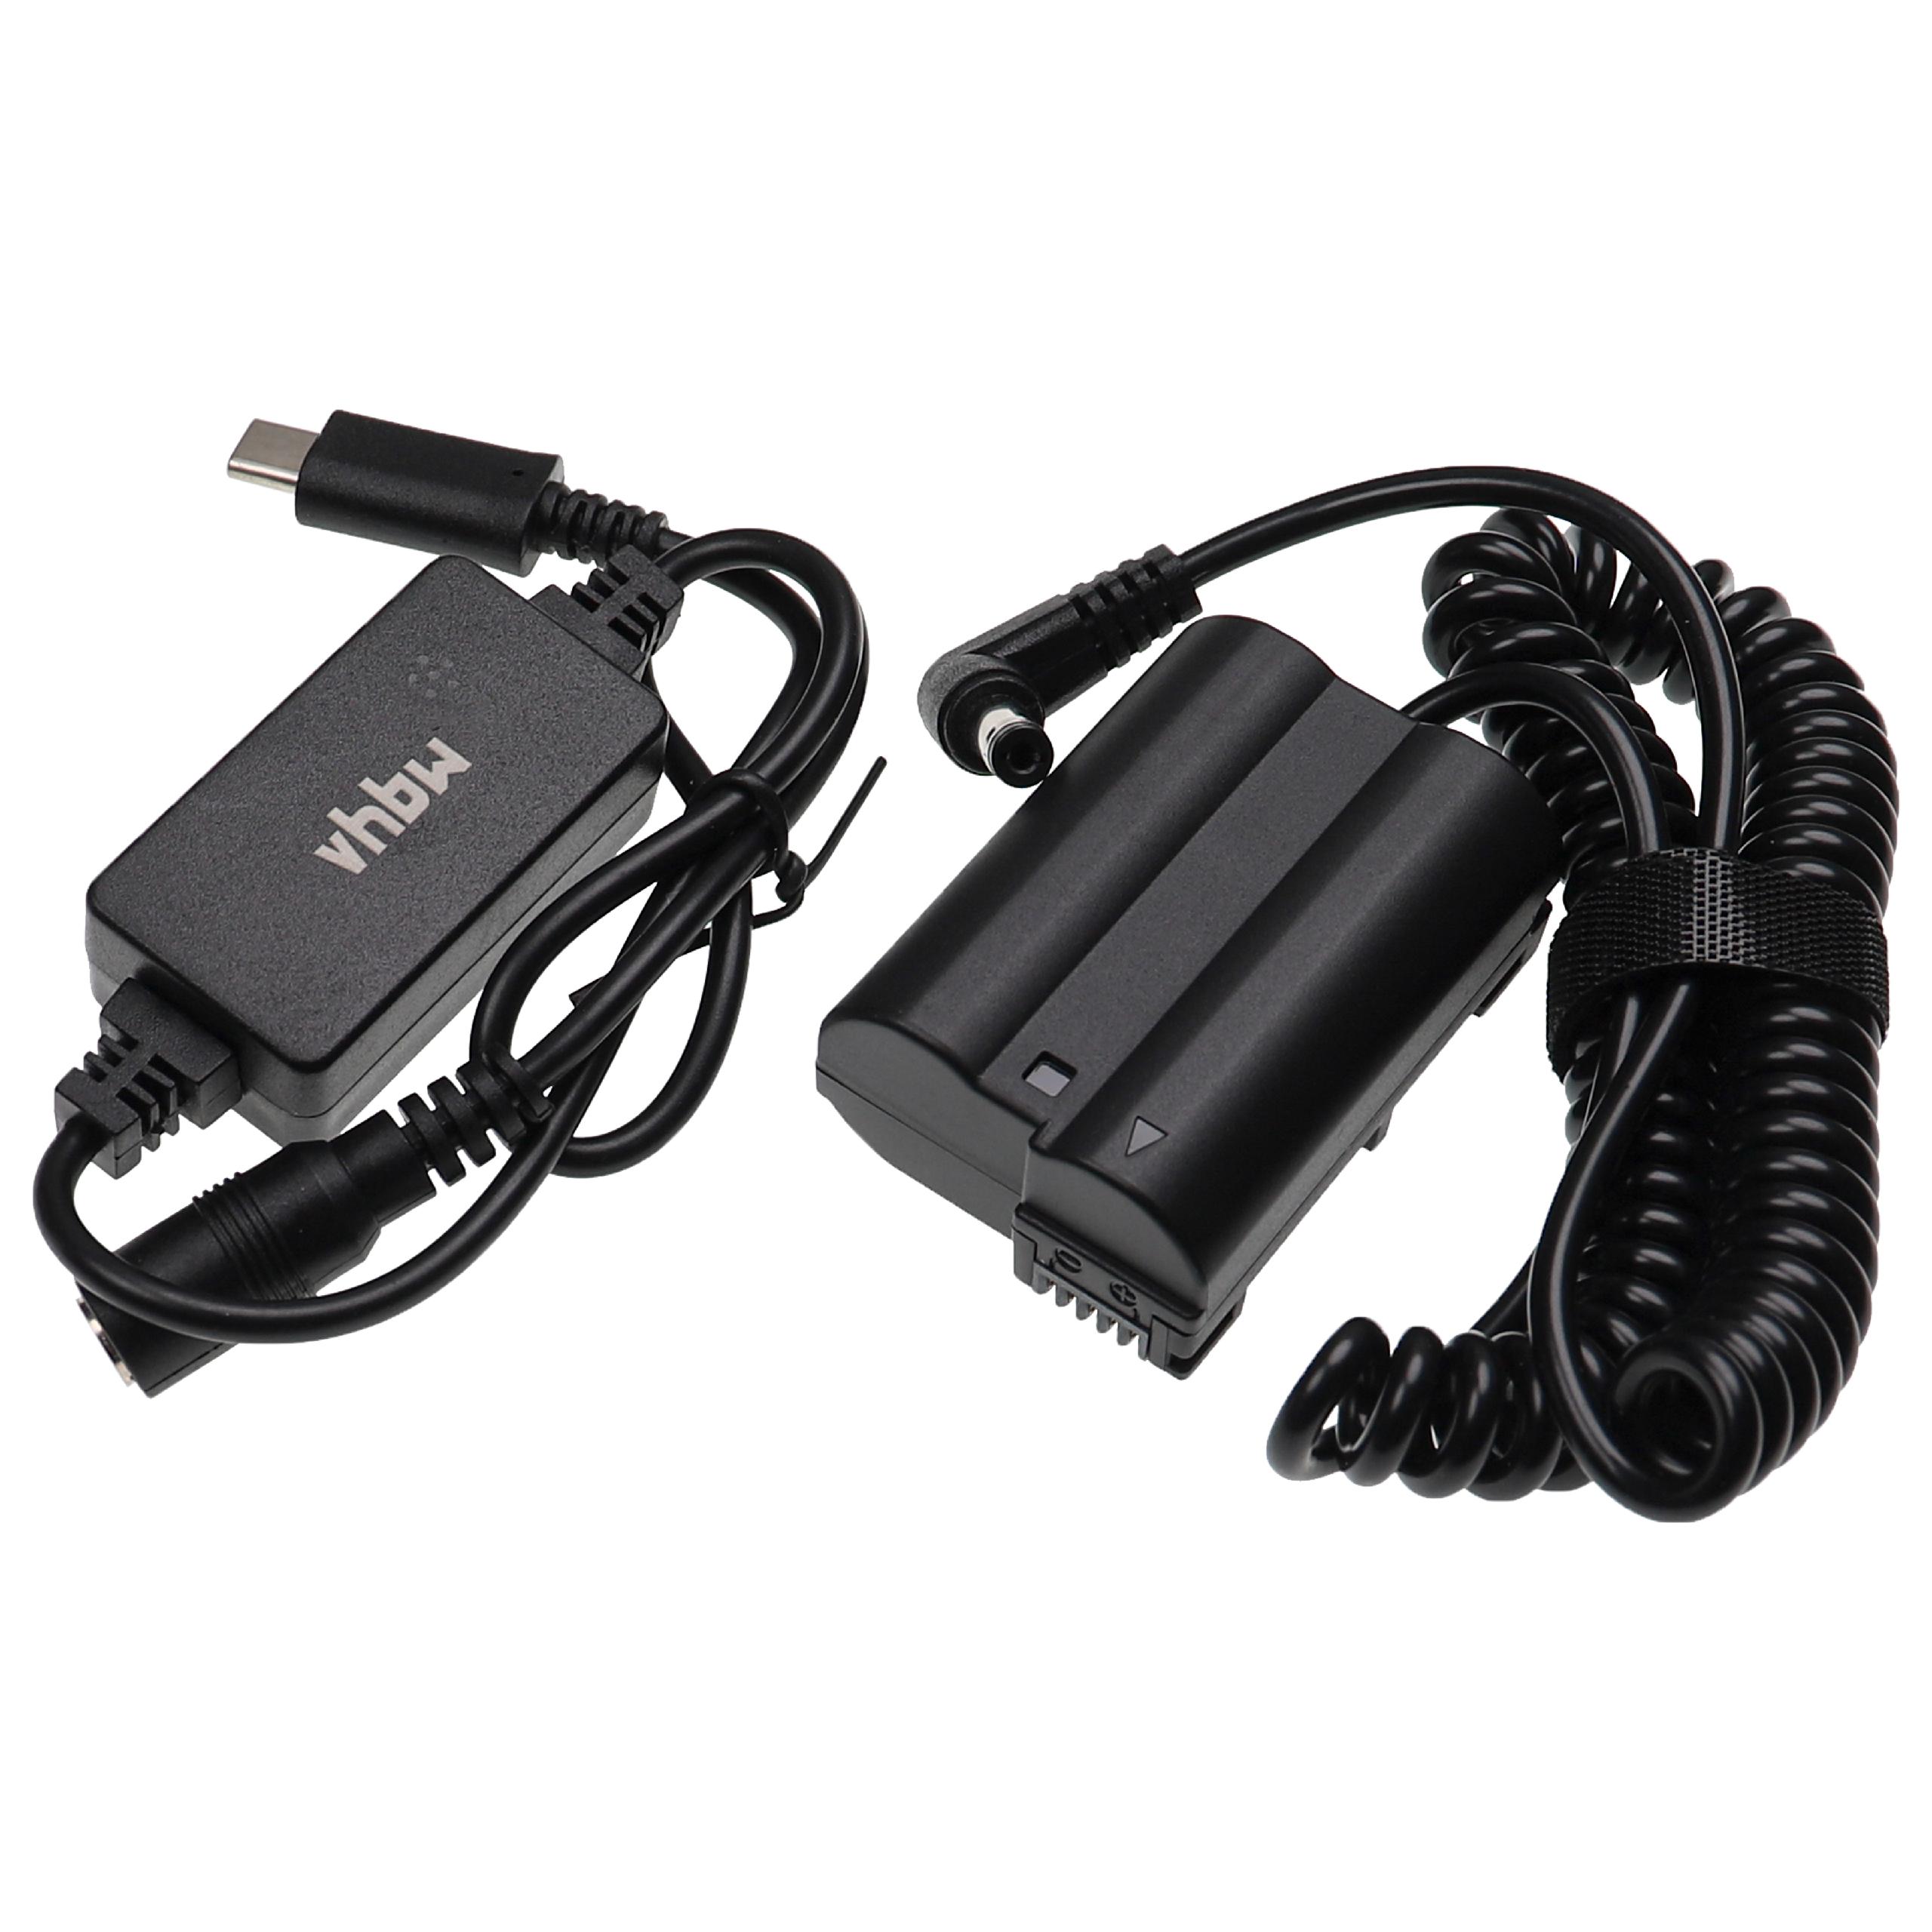 USB Power Supply replaces EN-EL15AEN-EL15 for Camera + DC Coupler as Nikon EP-5B - 2 m, 8.4 V 3.0 A